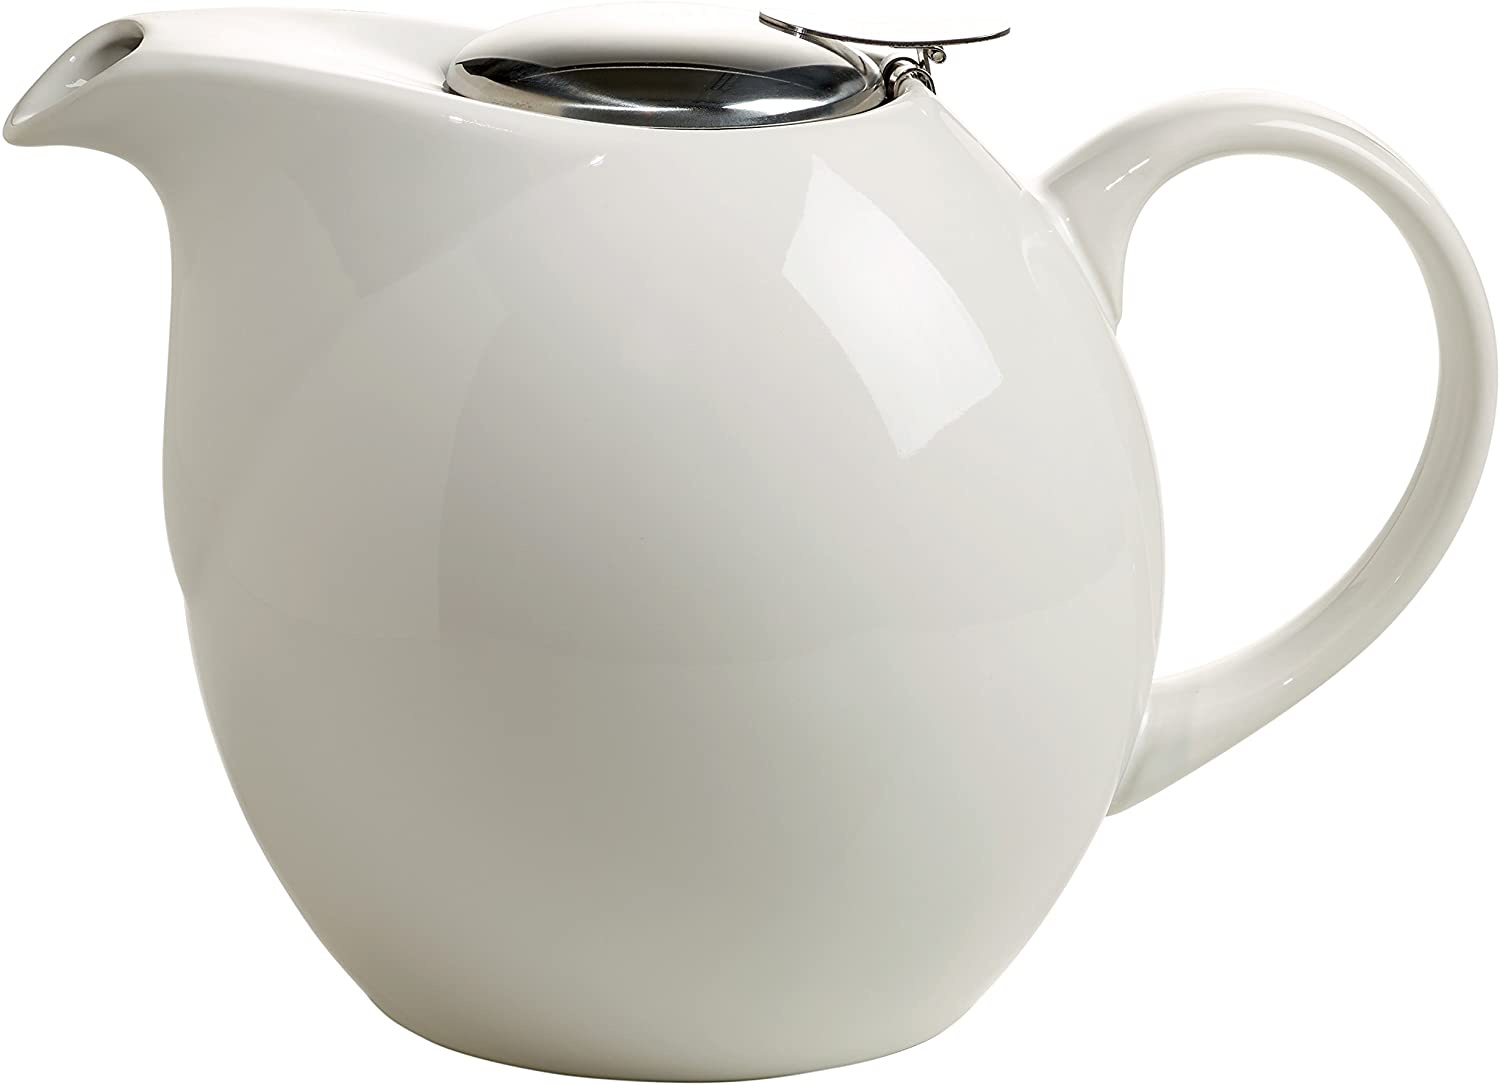 Maxwell & Williams InfusionsT Teapot, Ceramic, White, 24.5 x 15 x 16 cm